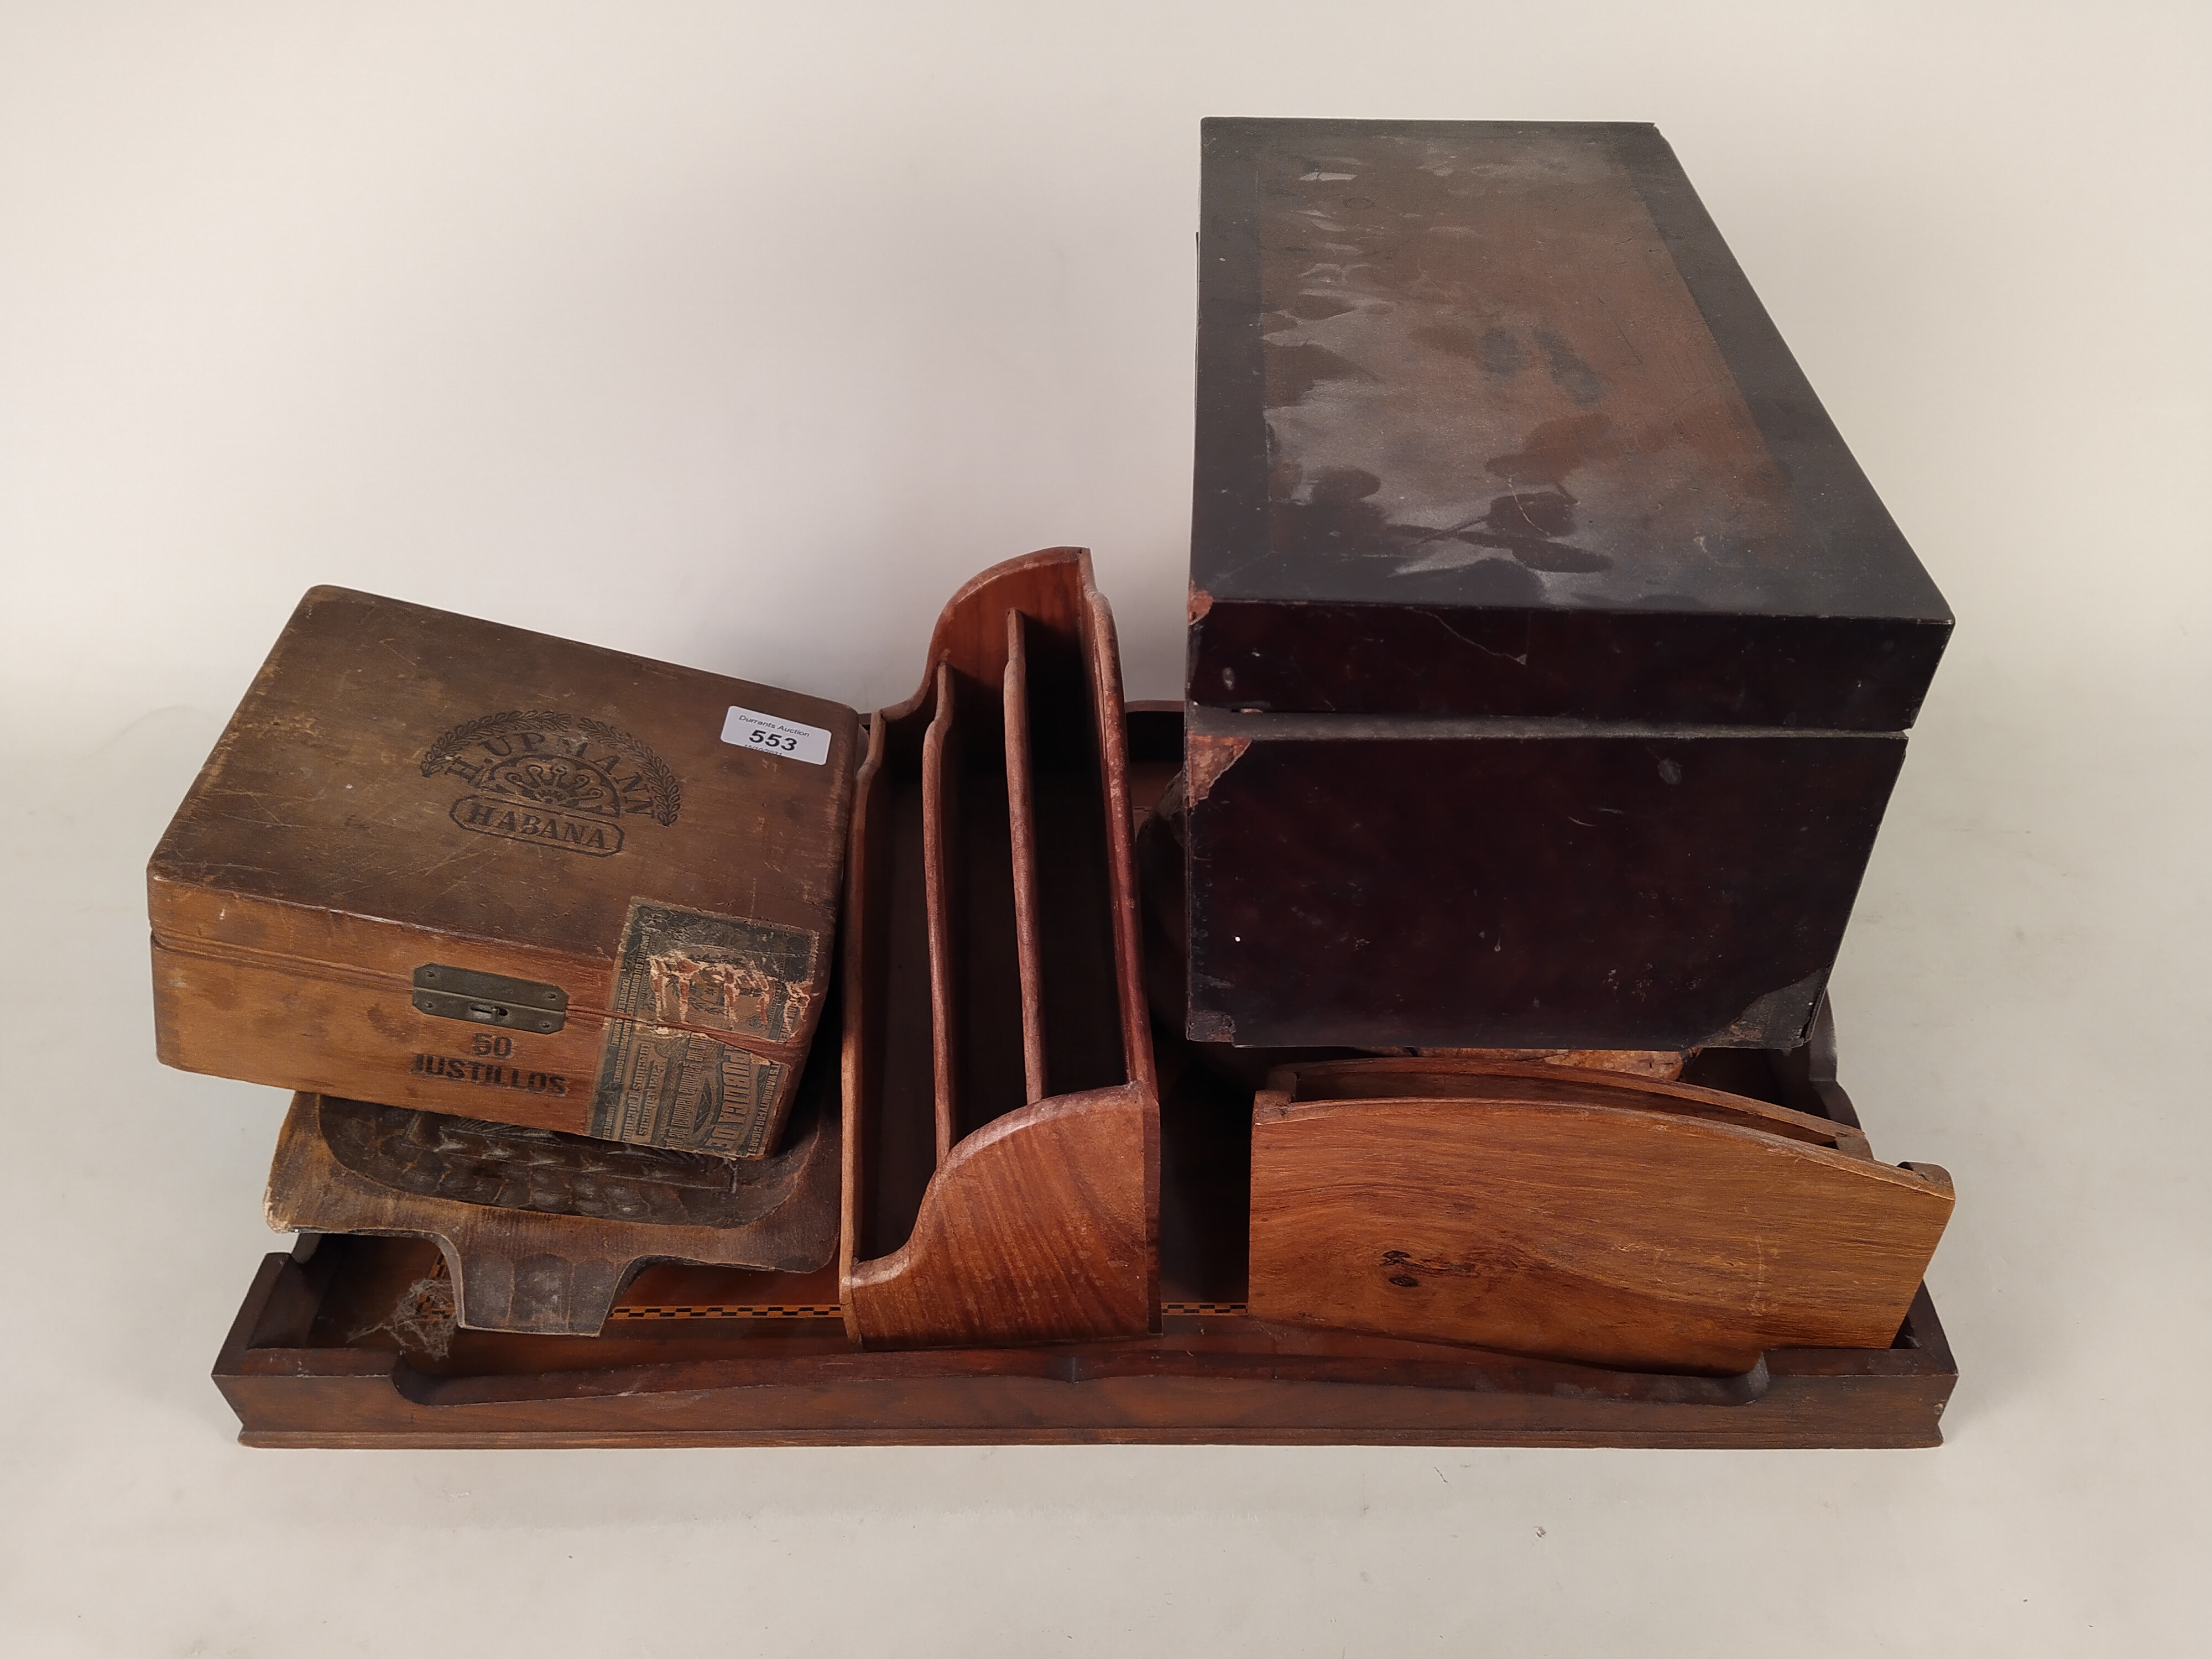 A wooden inlaid tray plus a tea caddy, H Upmann Havana cigar box (no contents),